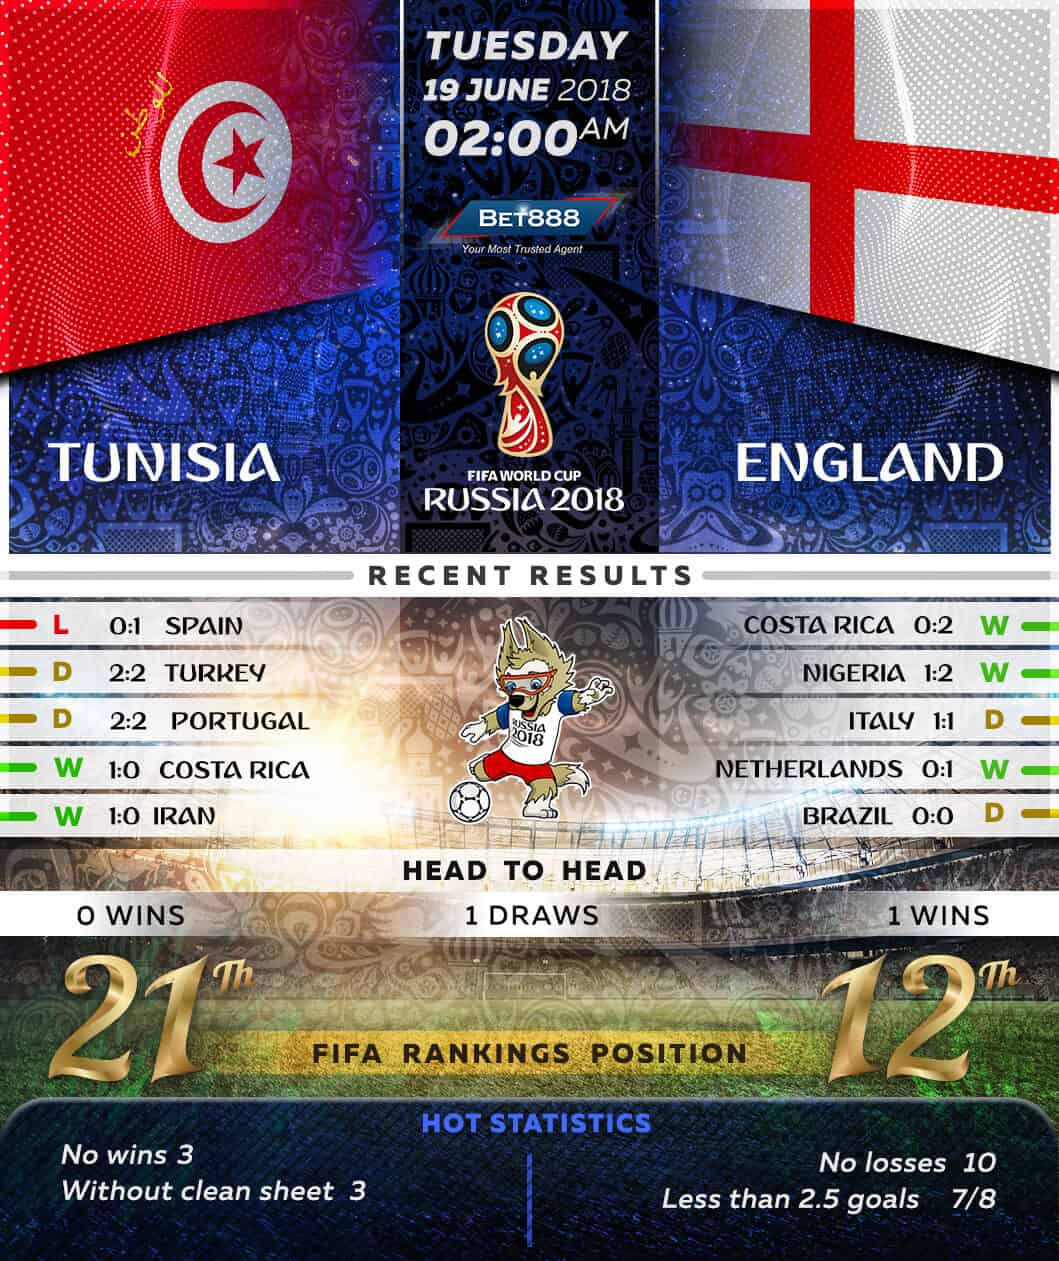 Tunisia vs England 19/06/18